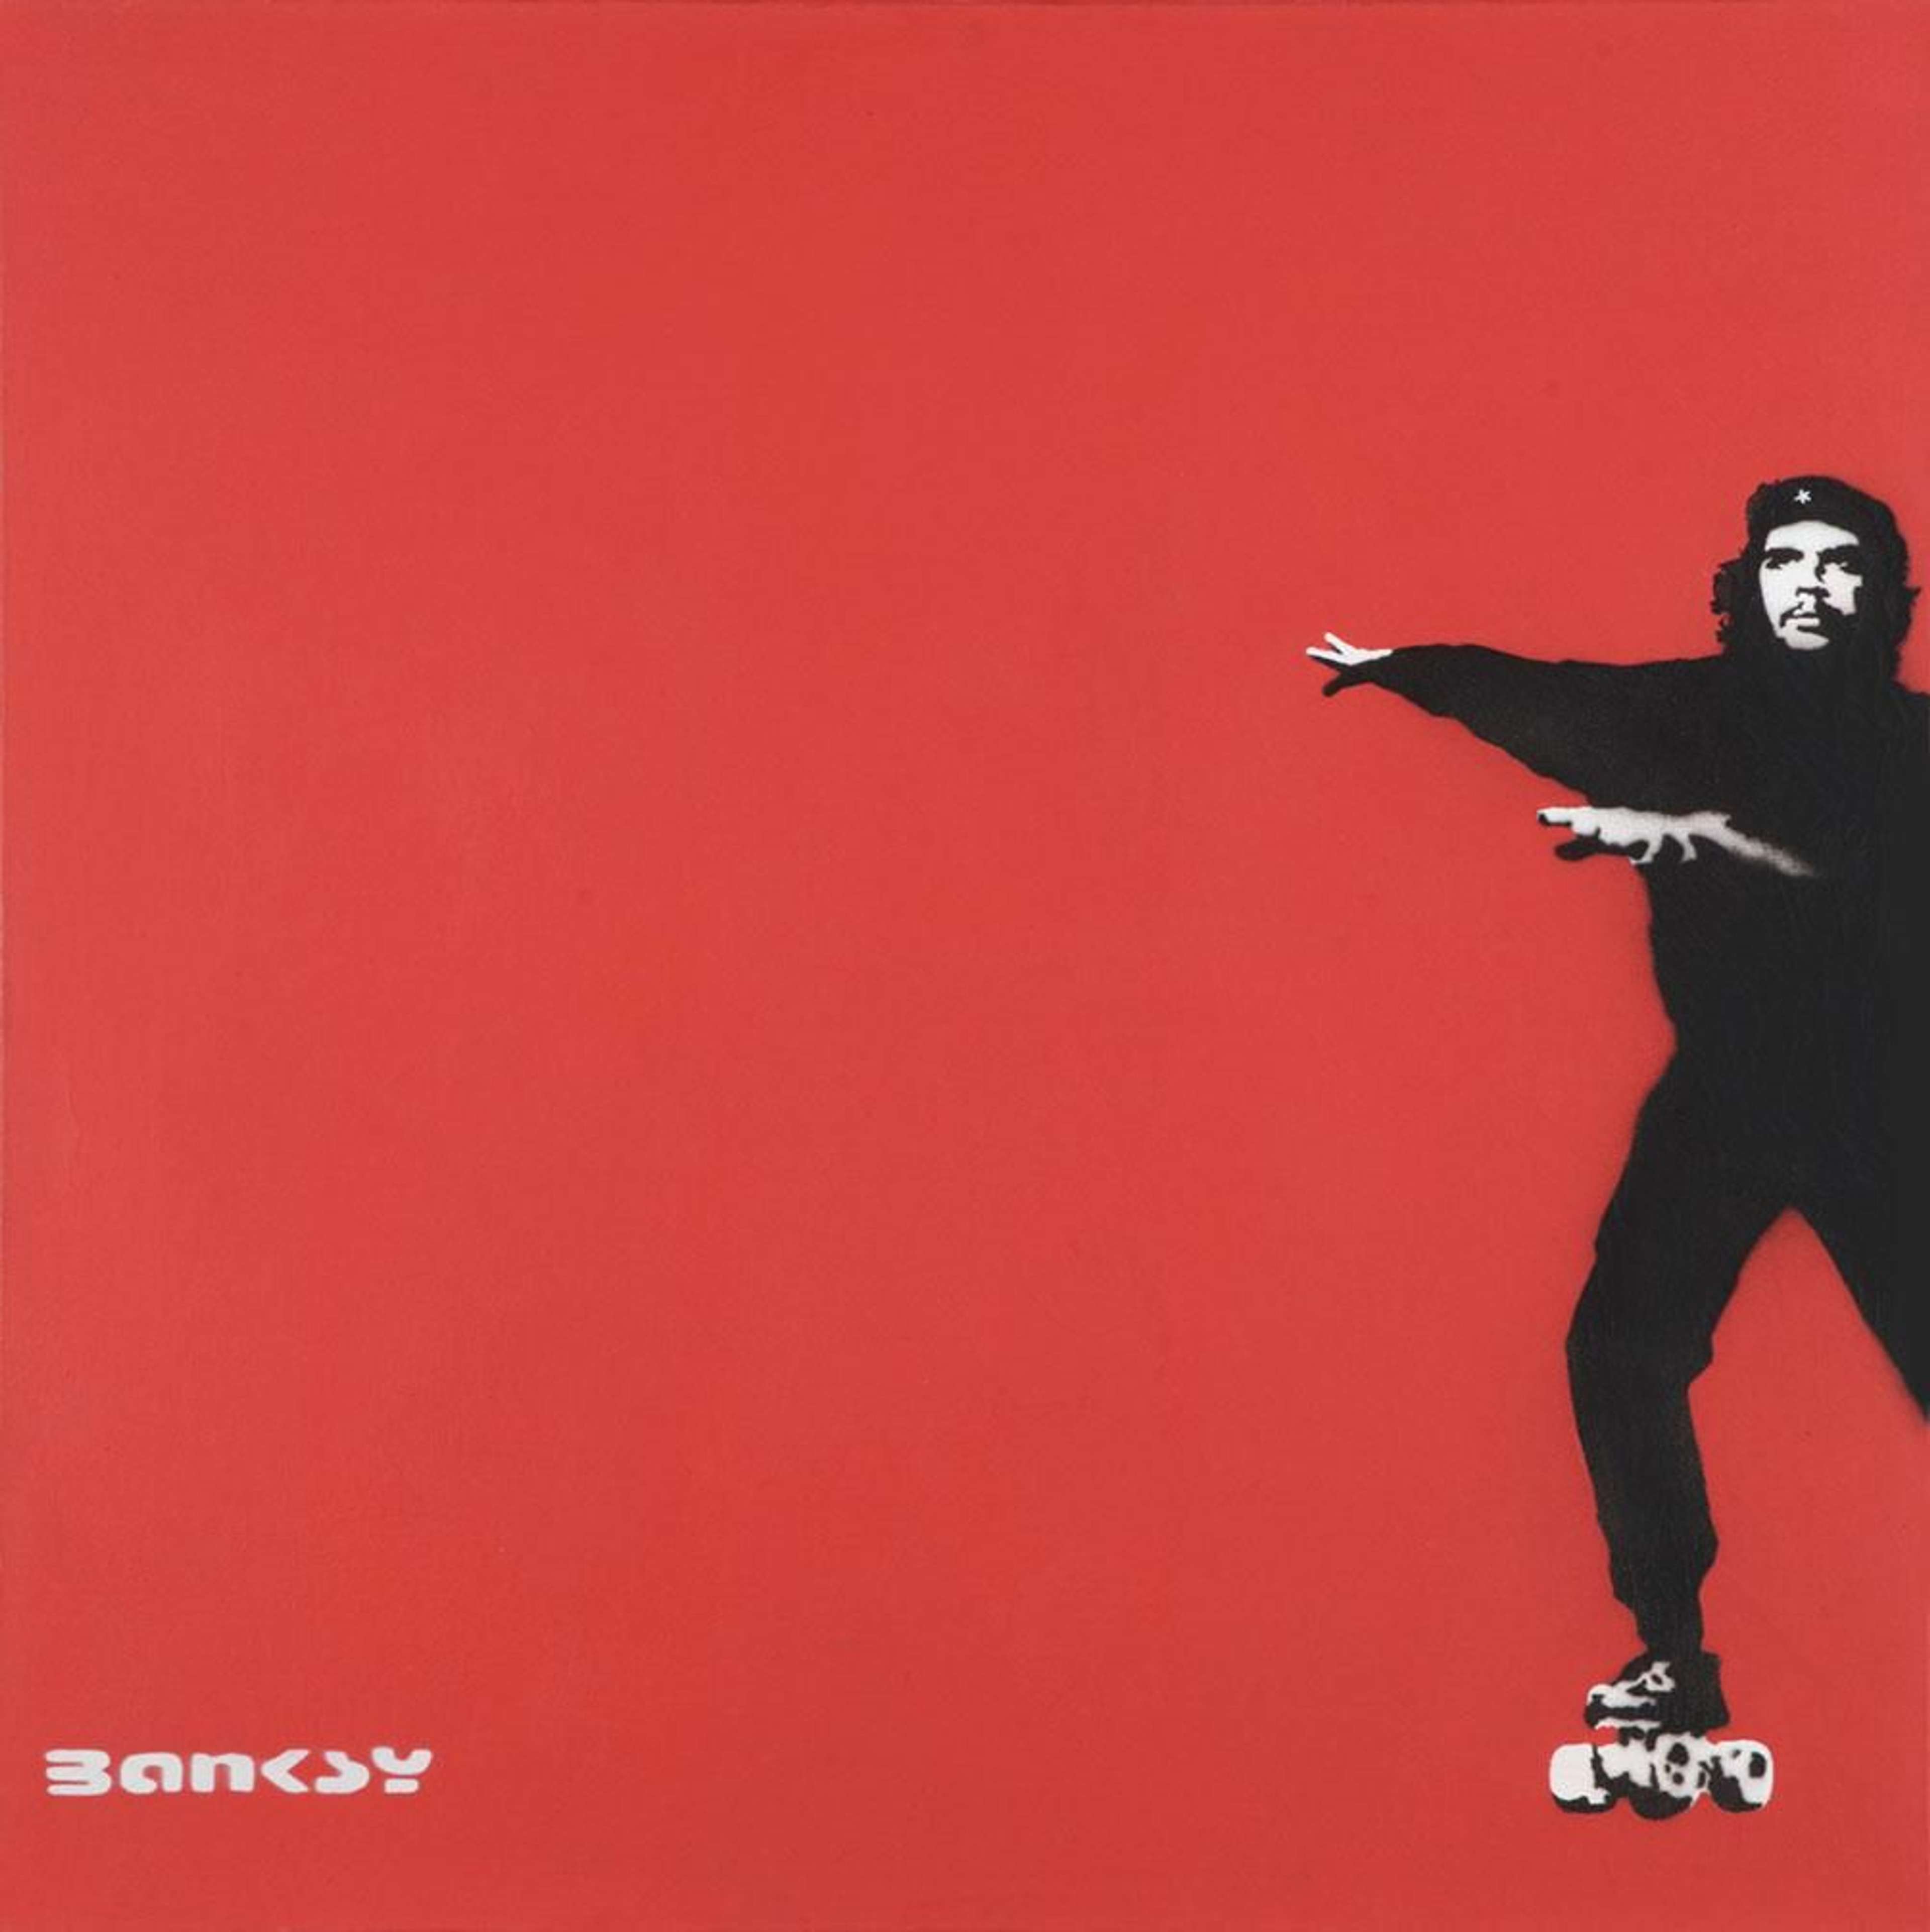 Banksy's Che Guevara On Skates